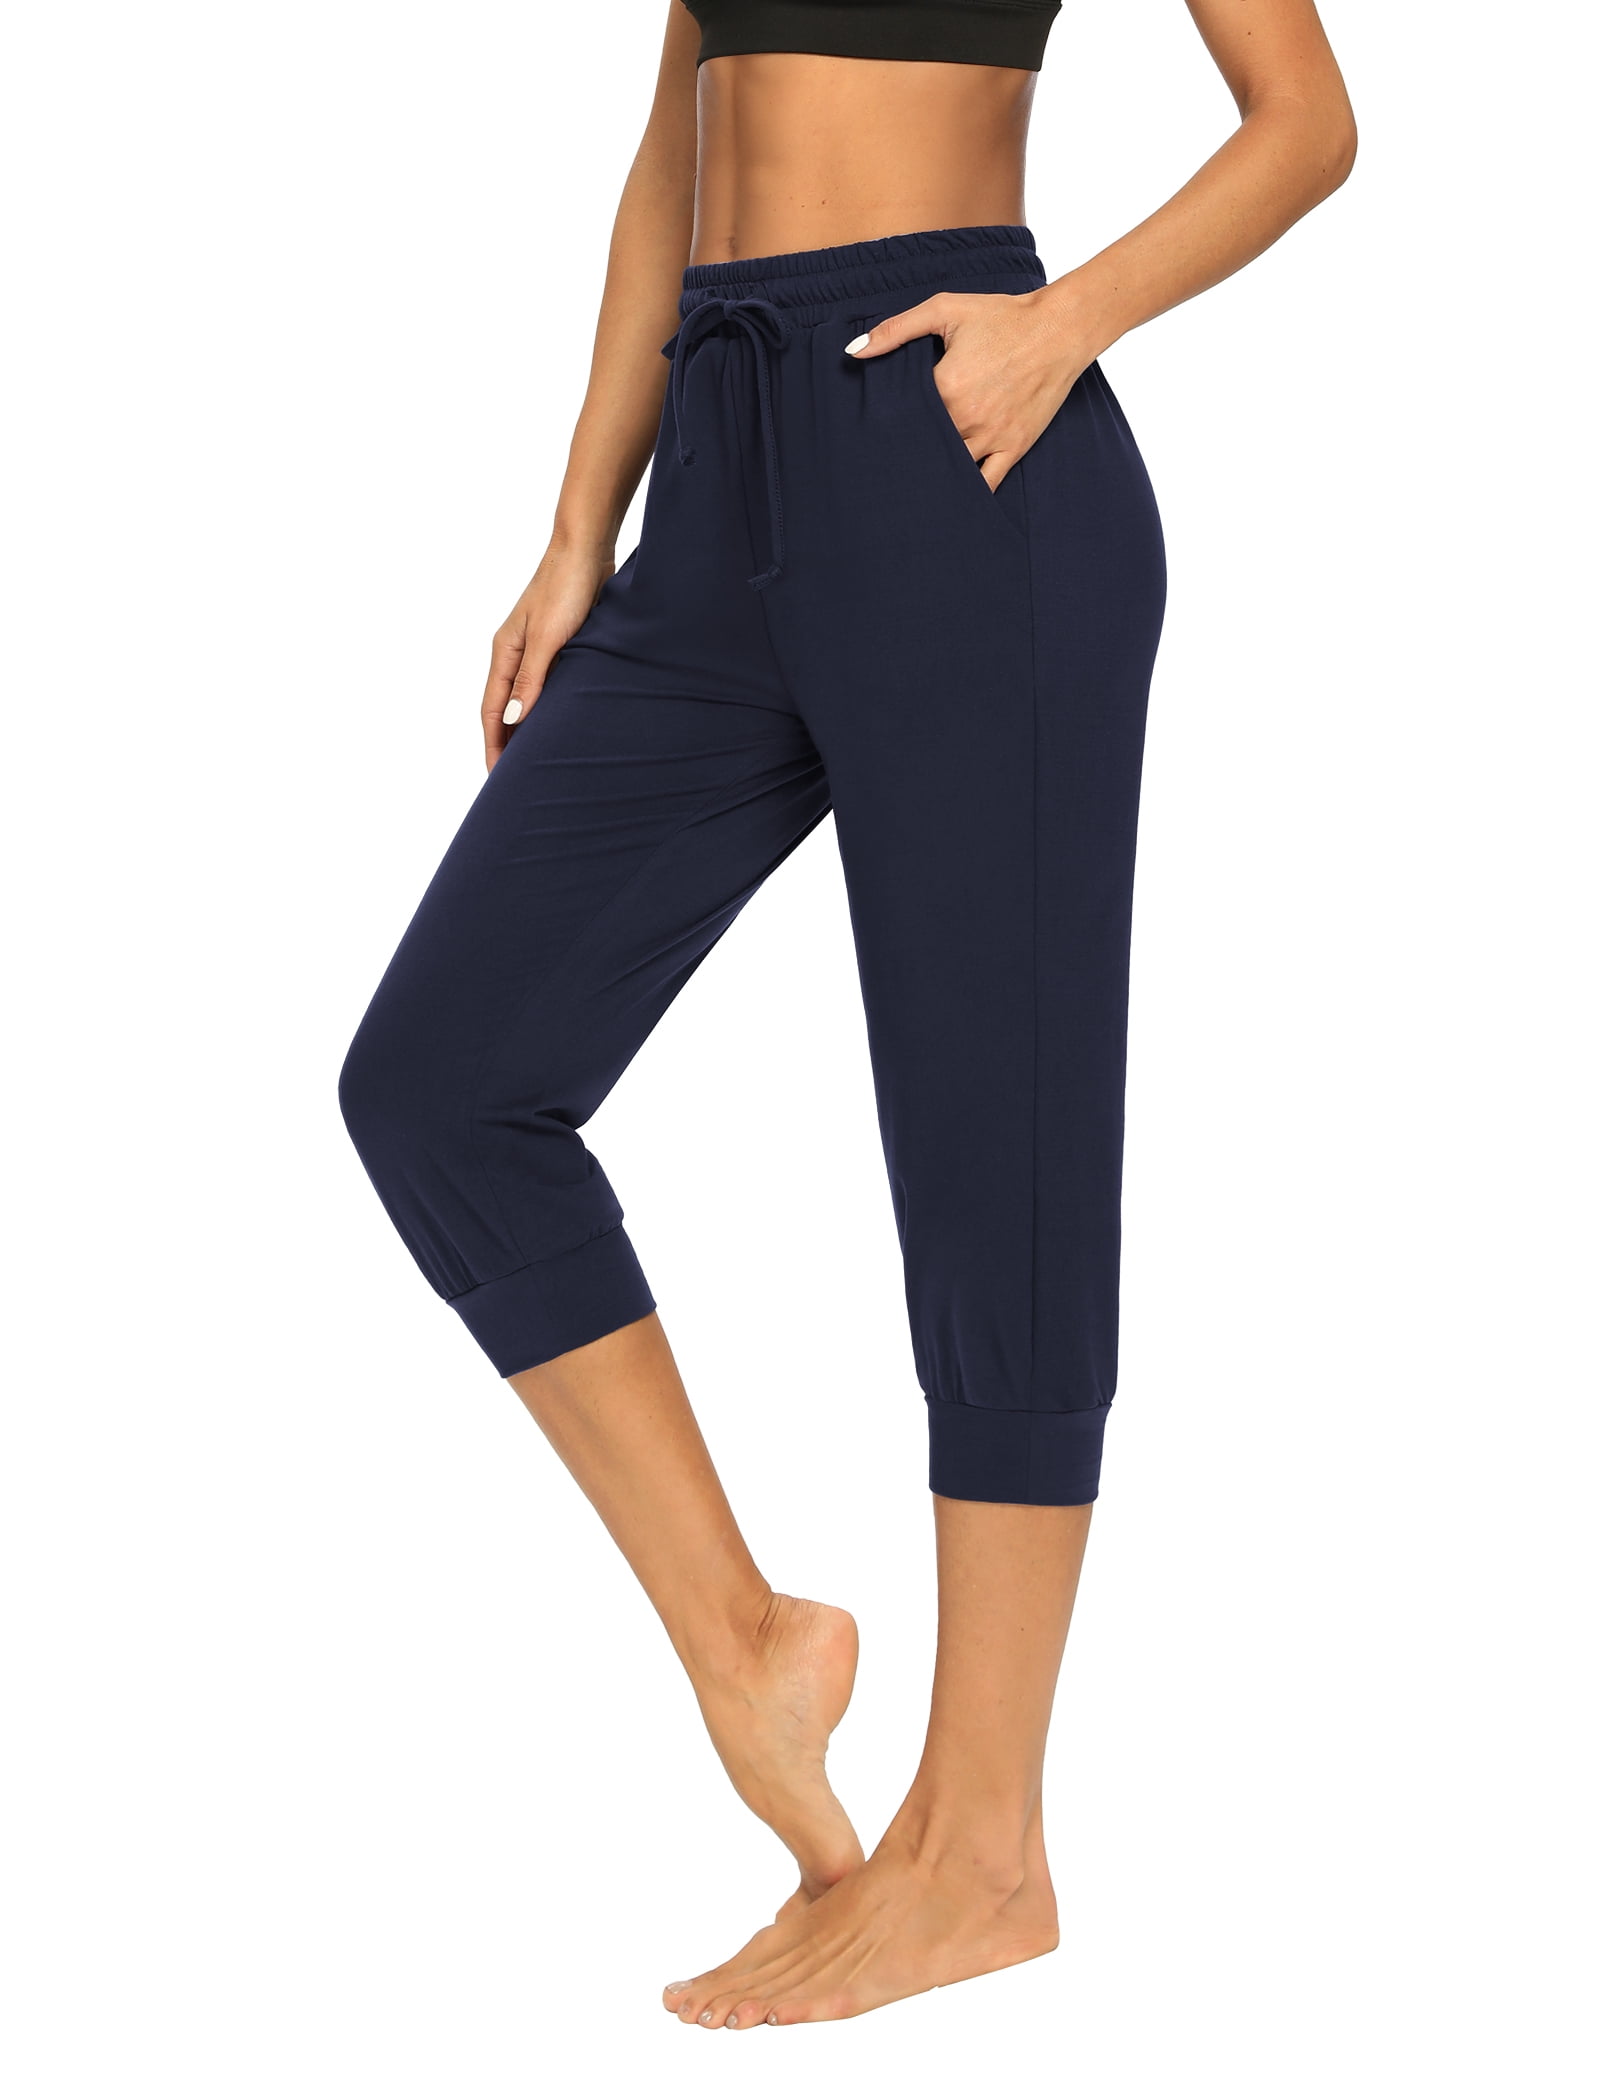 Sarin Mathews Yoga Pants for Women with Pockets Capri Workout Leggings for Women High Waisted Athletic Running Leggings 